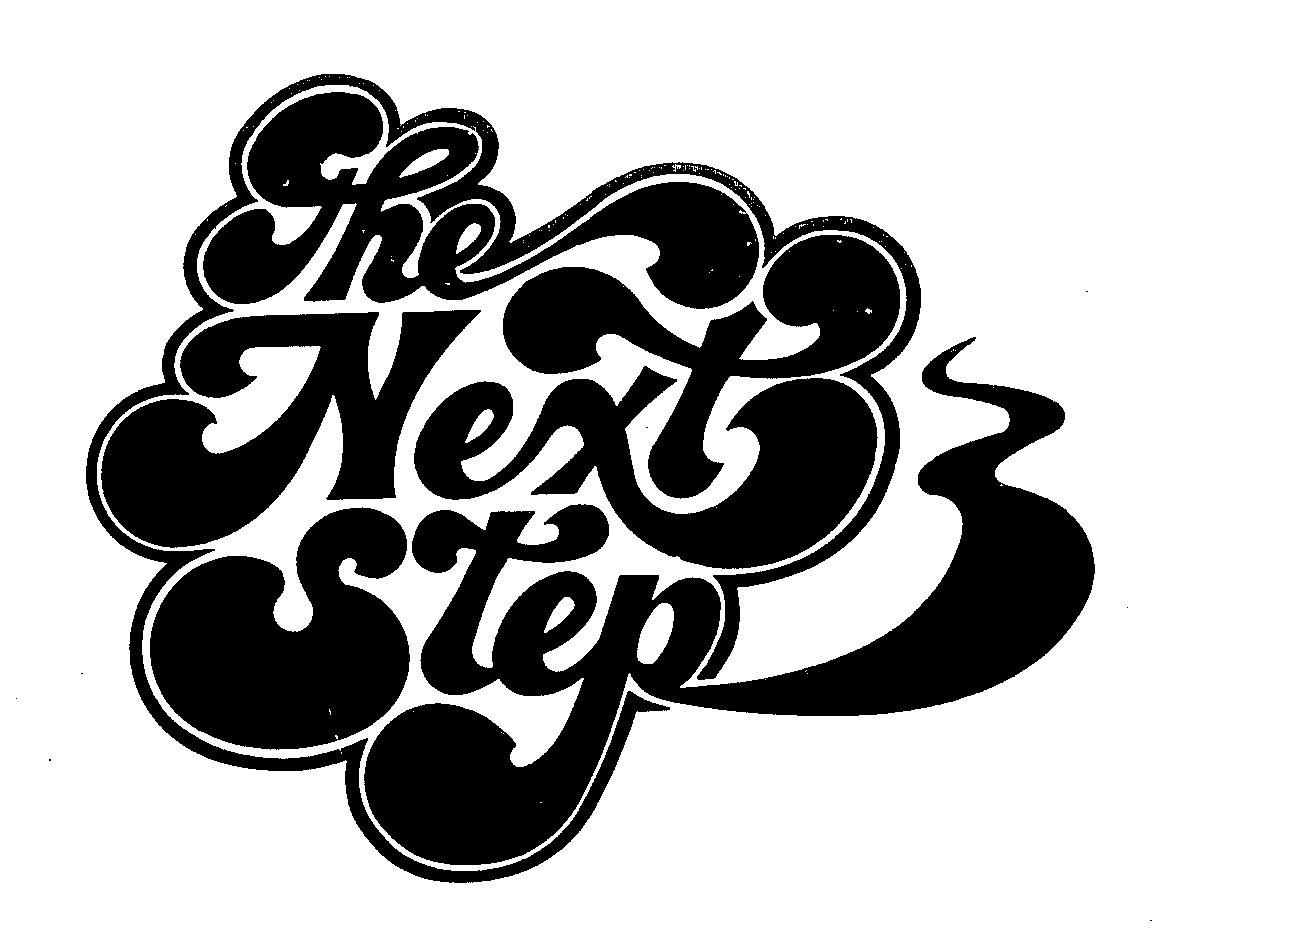 THE NEXT STEP